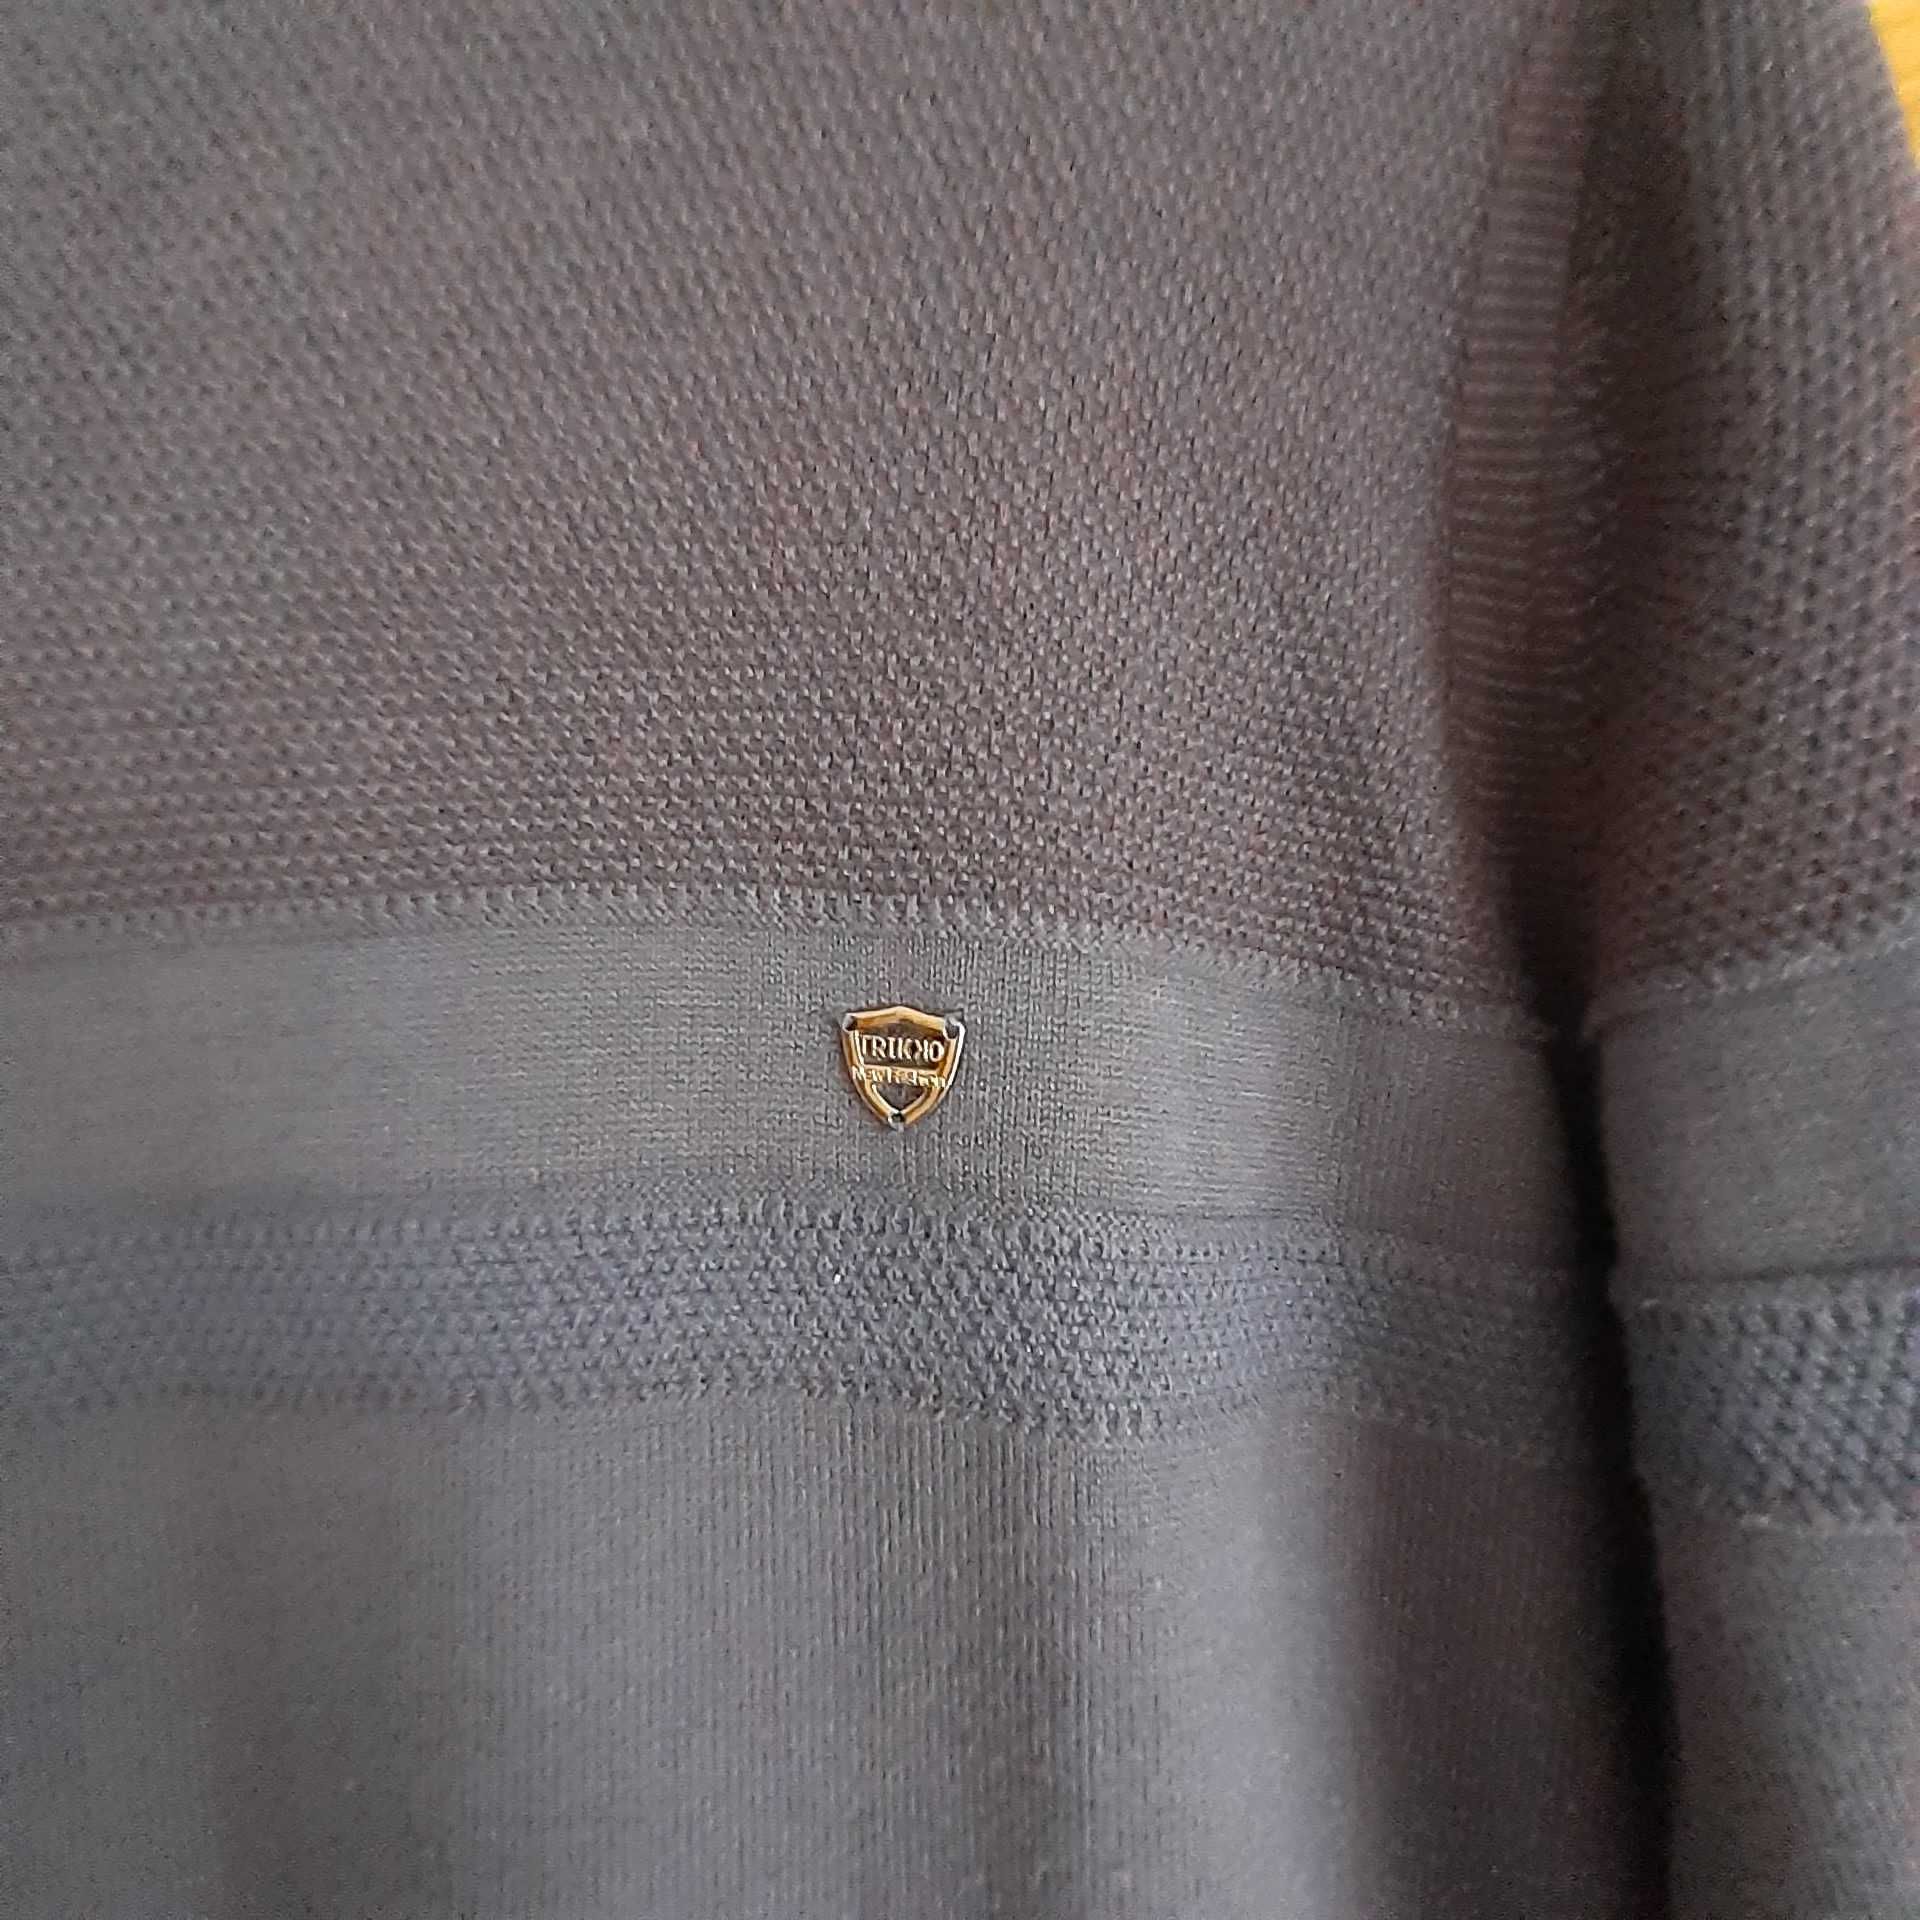 Granatowy sweter // TRIKKO